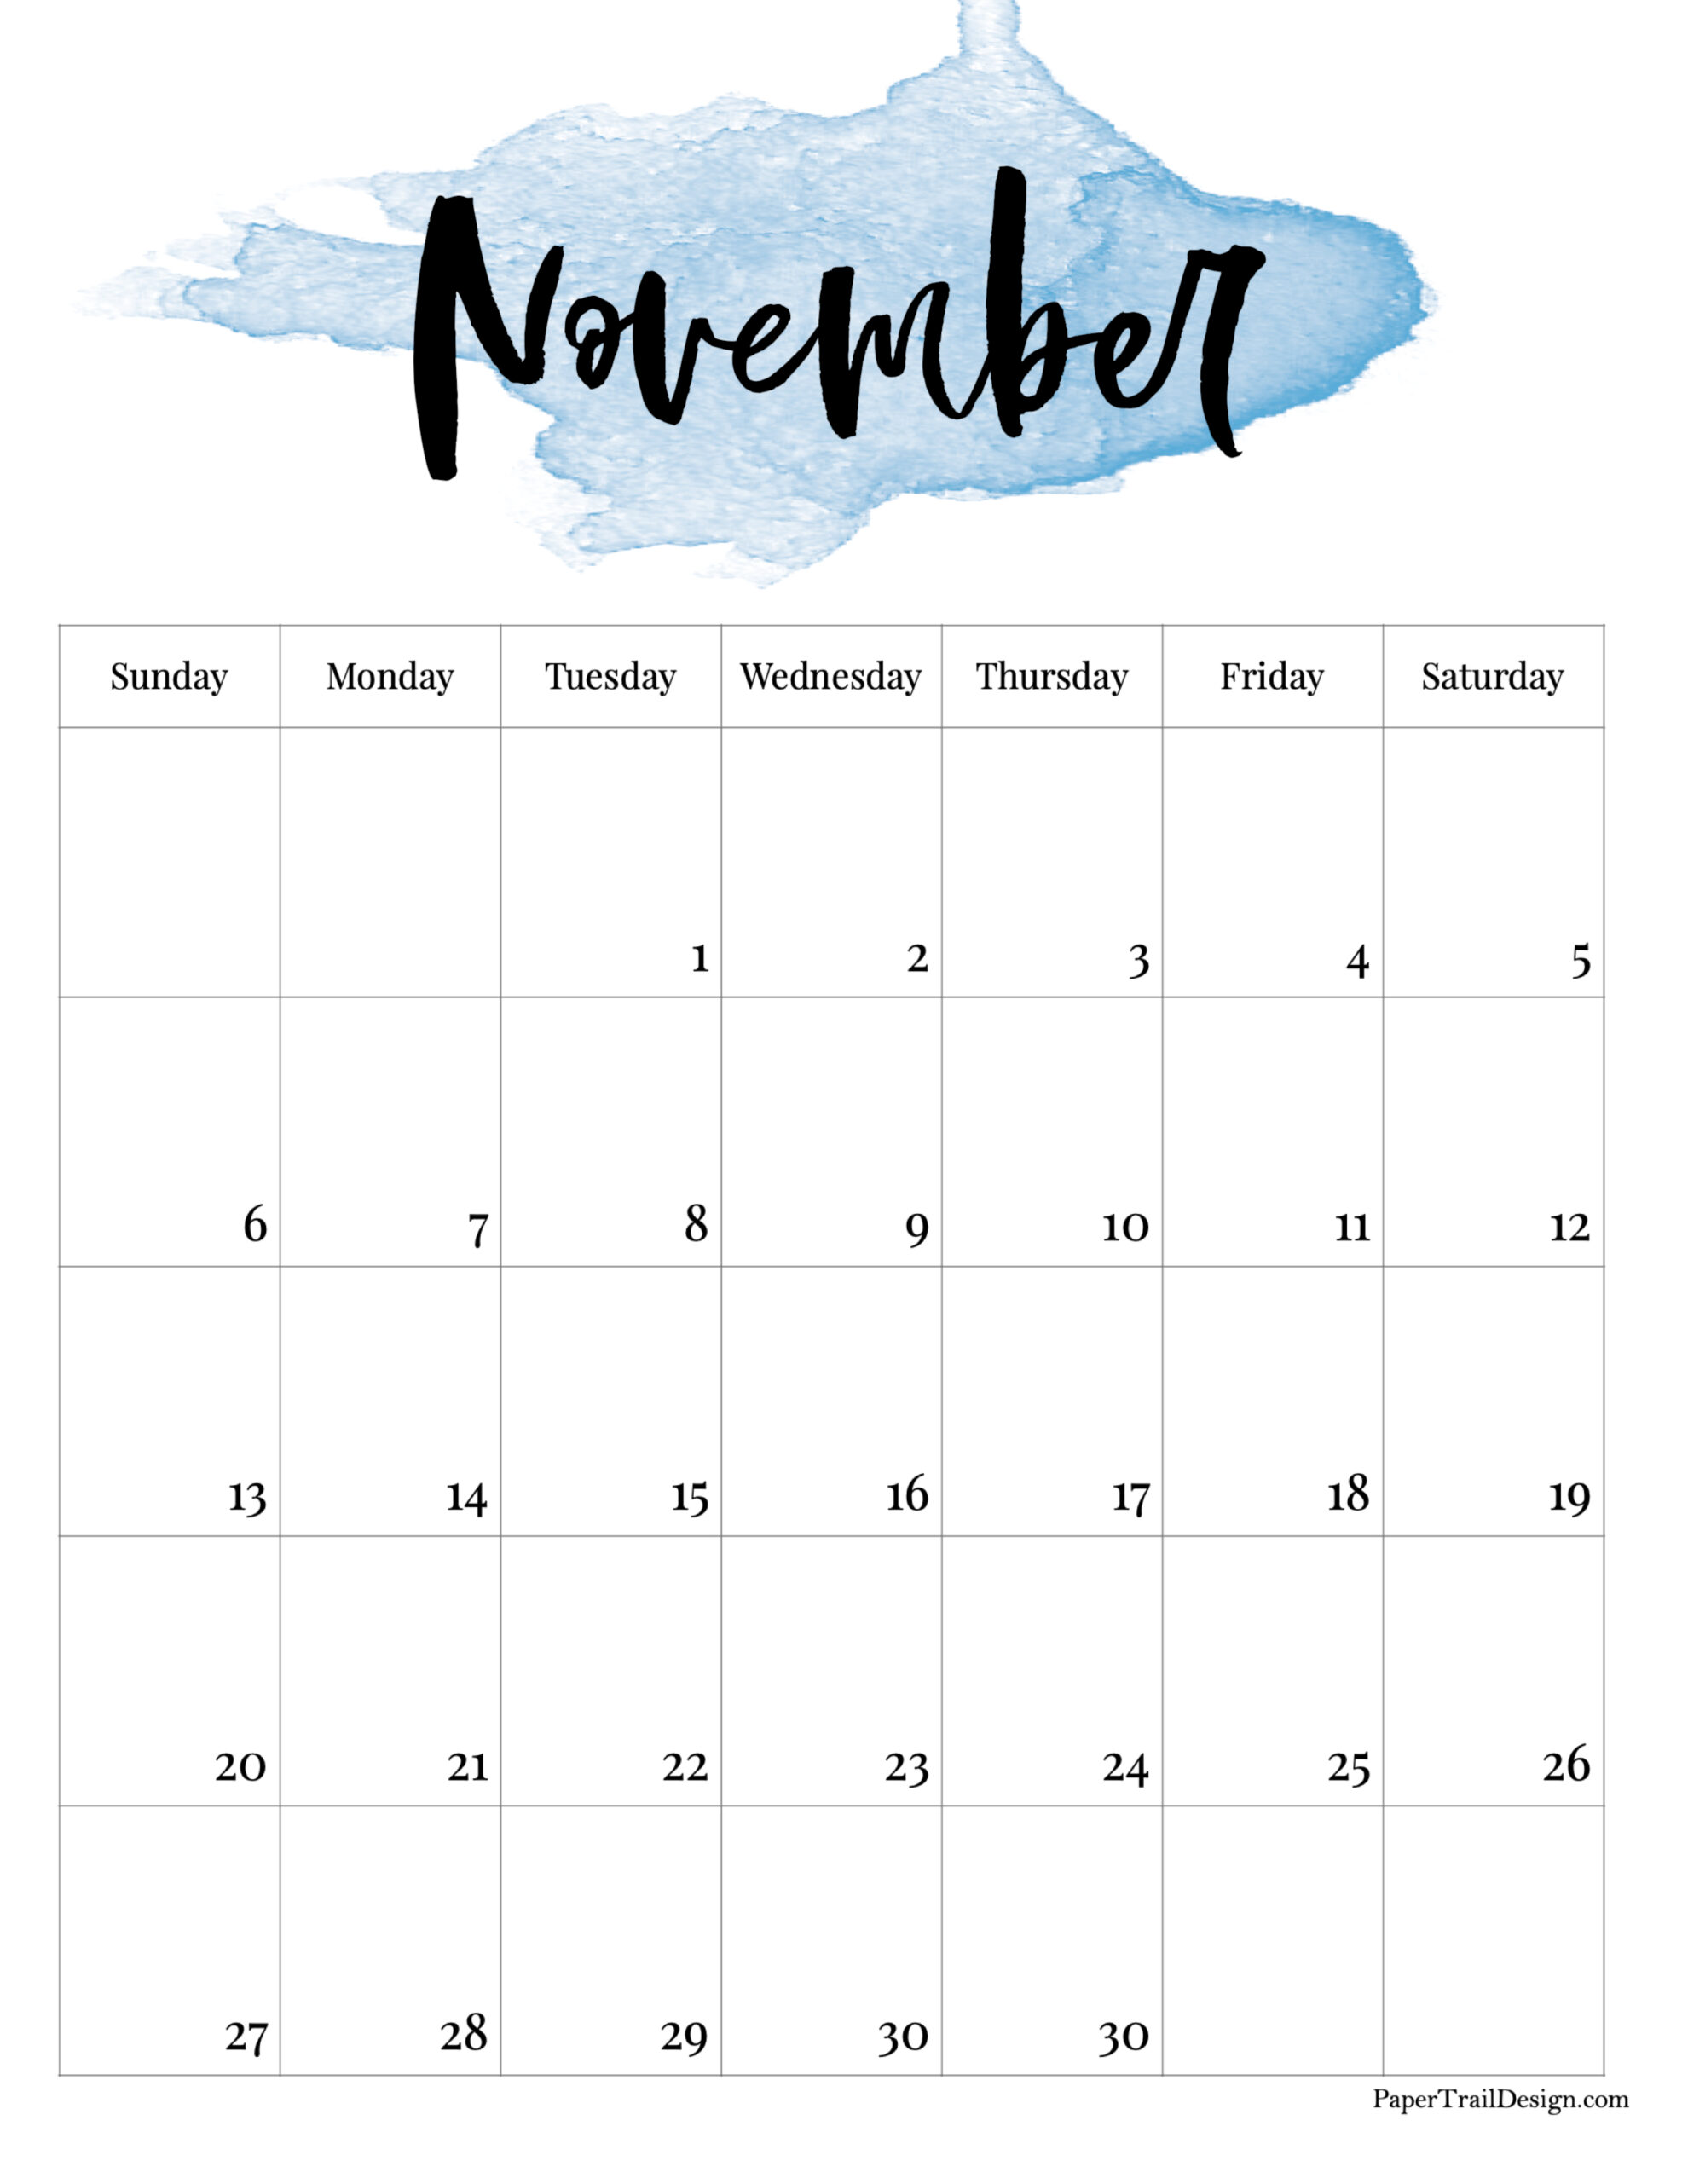 November 2022 Calendar Cute 2022 Printable Calendar - Watercolor - Paper Trail Design